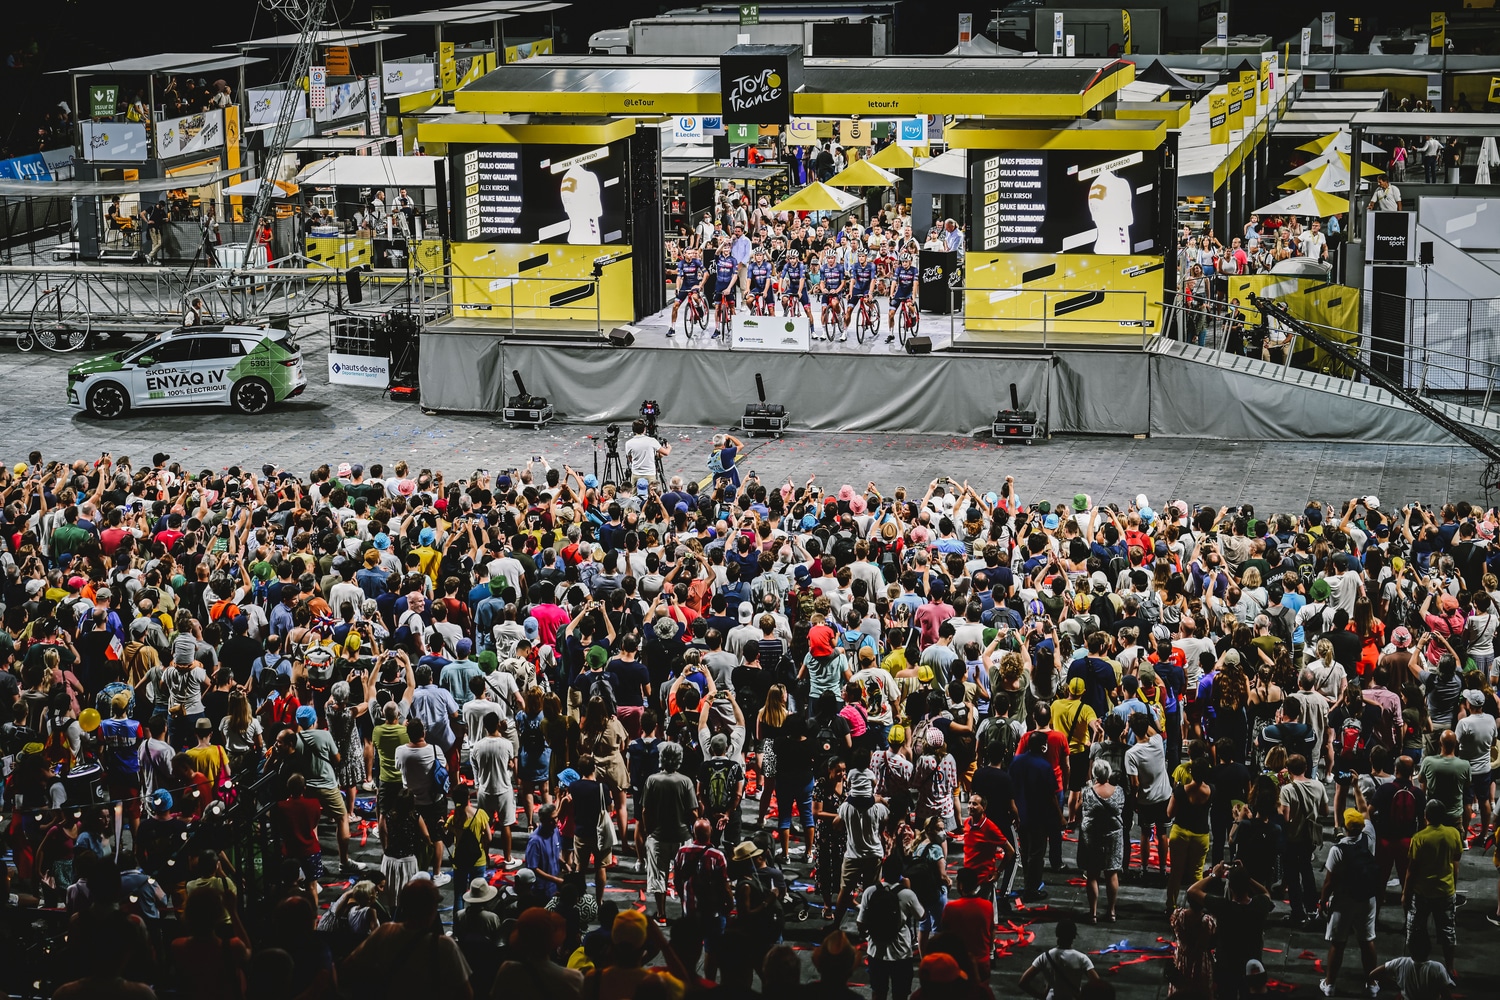 Tour de France Prudential Singapore Criterium 2023